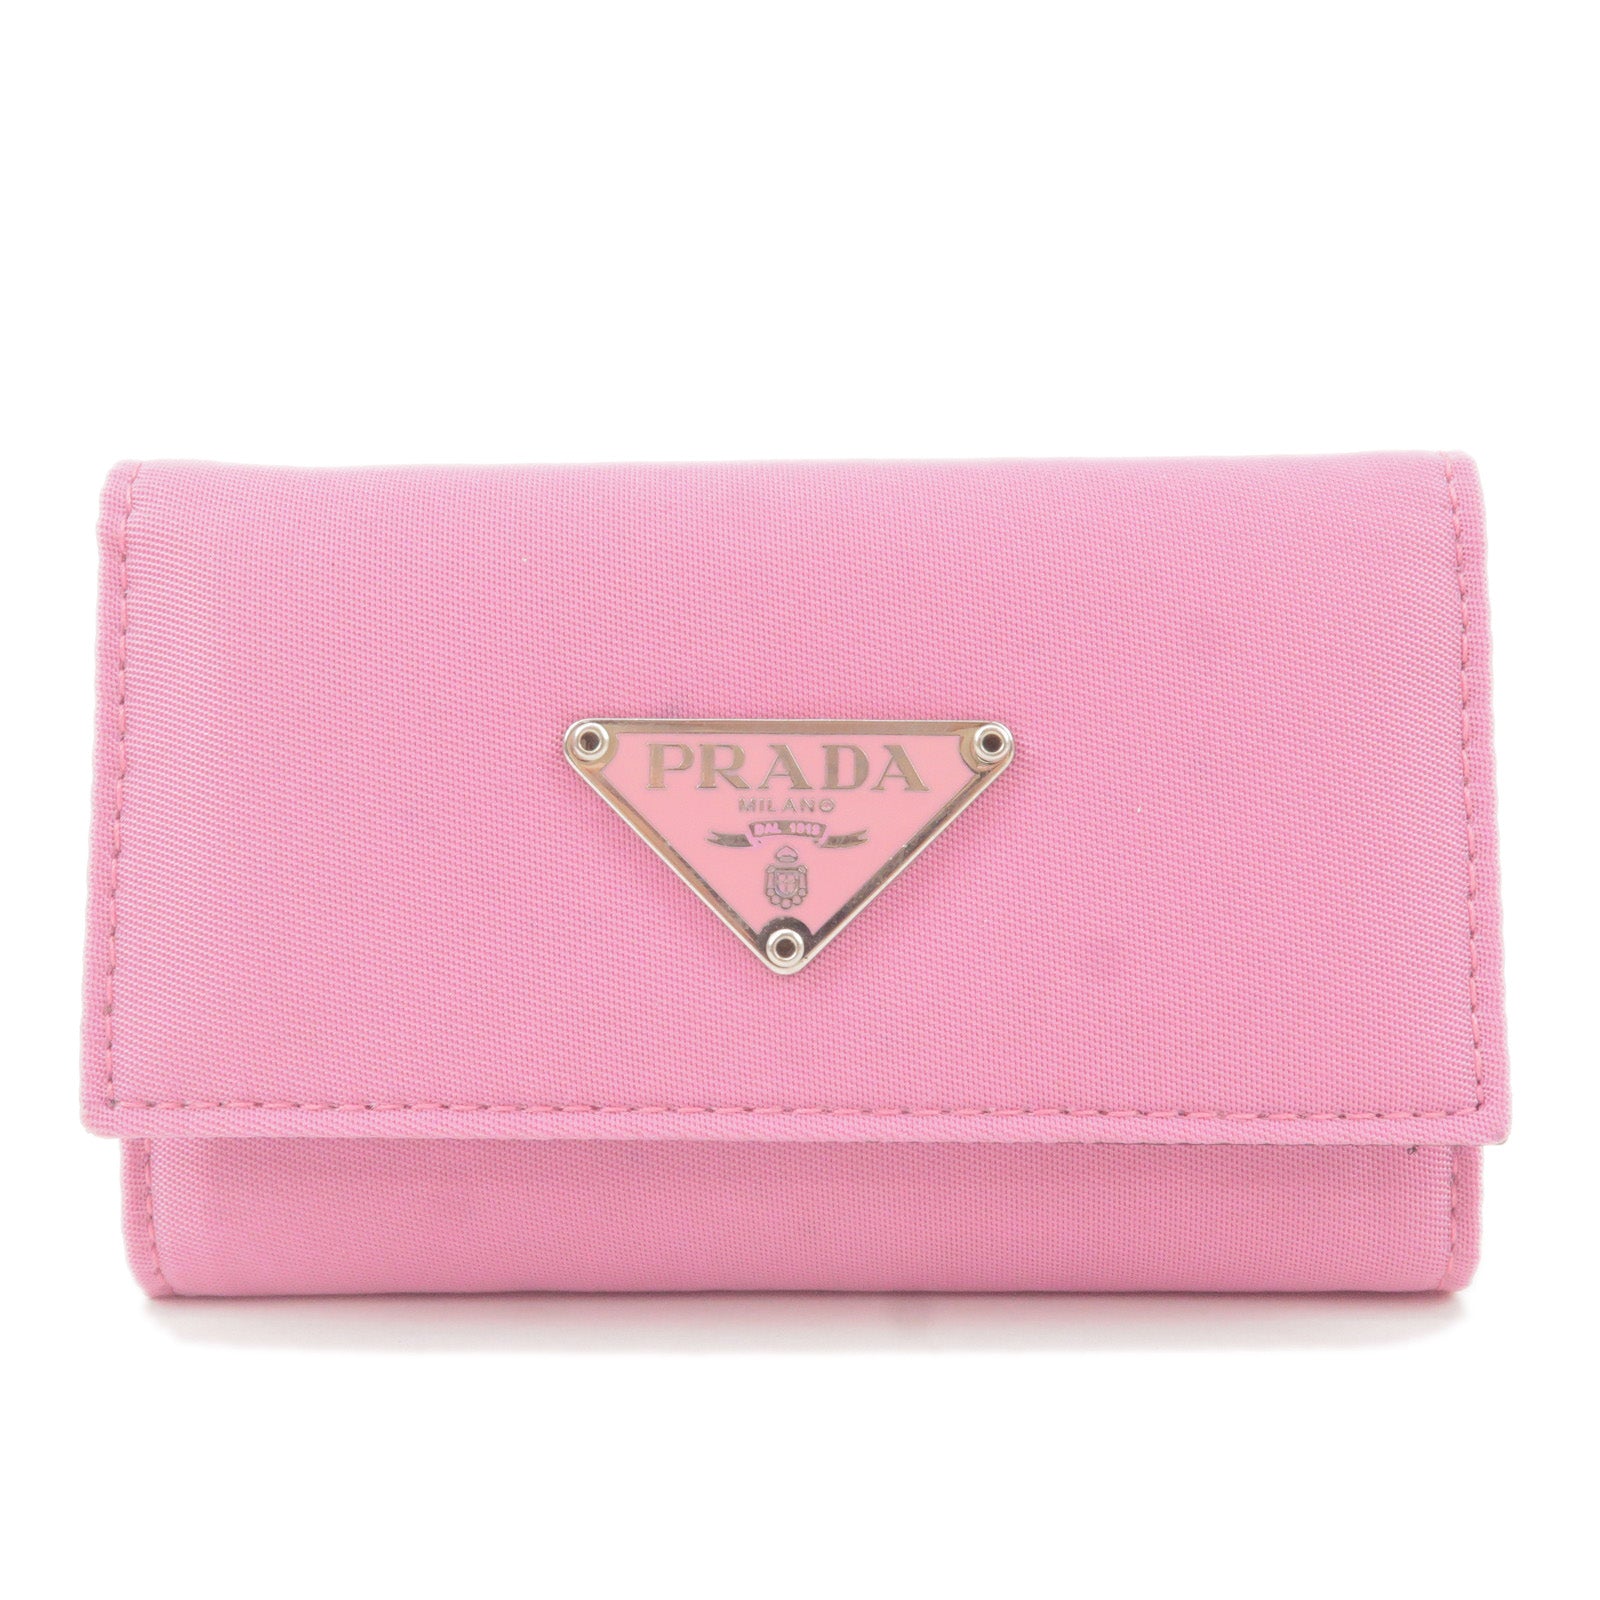 Key - Logo - Key - M222 – dct - row PRADA - Pre-owned row Prada Tote - Key  - Holder - Case - ep_vintage luxury Store - 6 - Pink - Rings - Leather